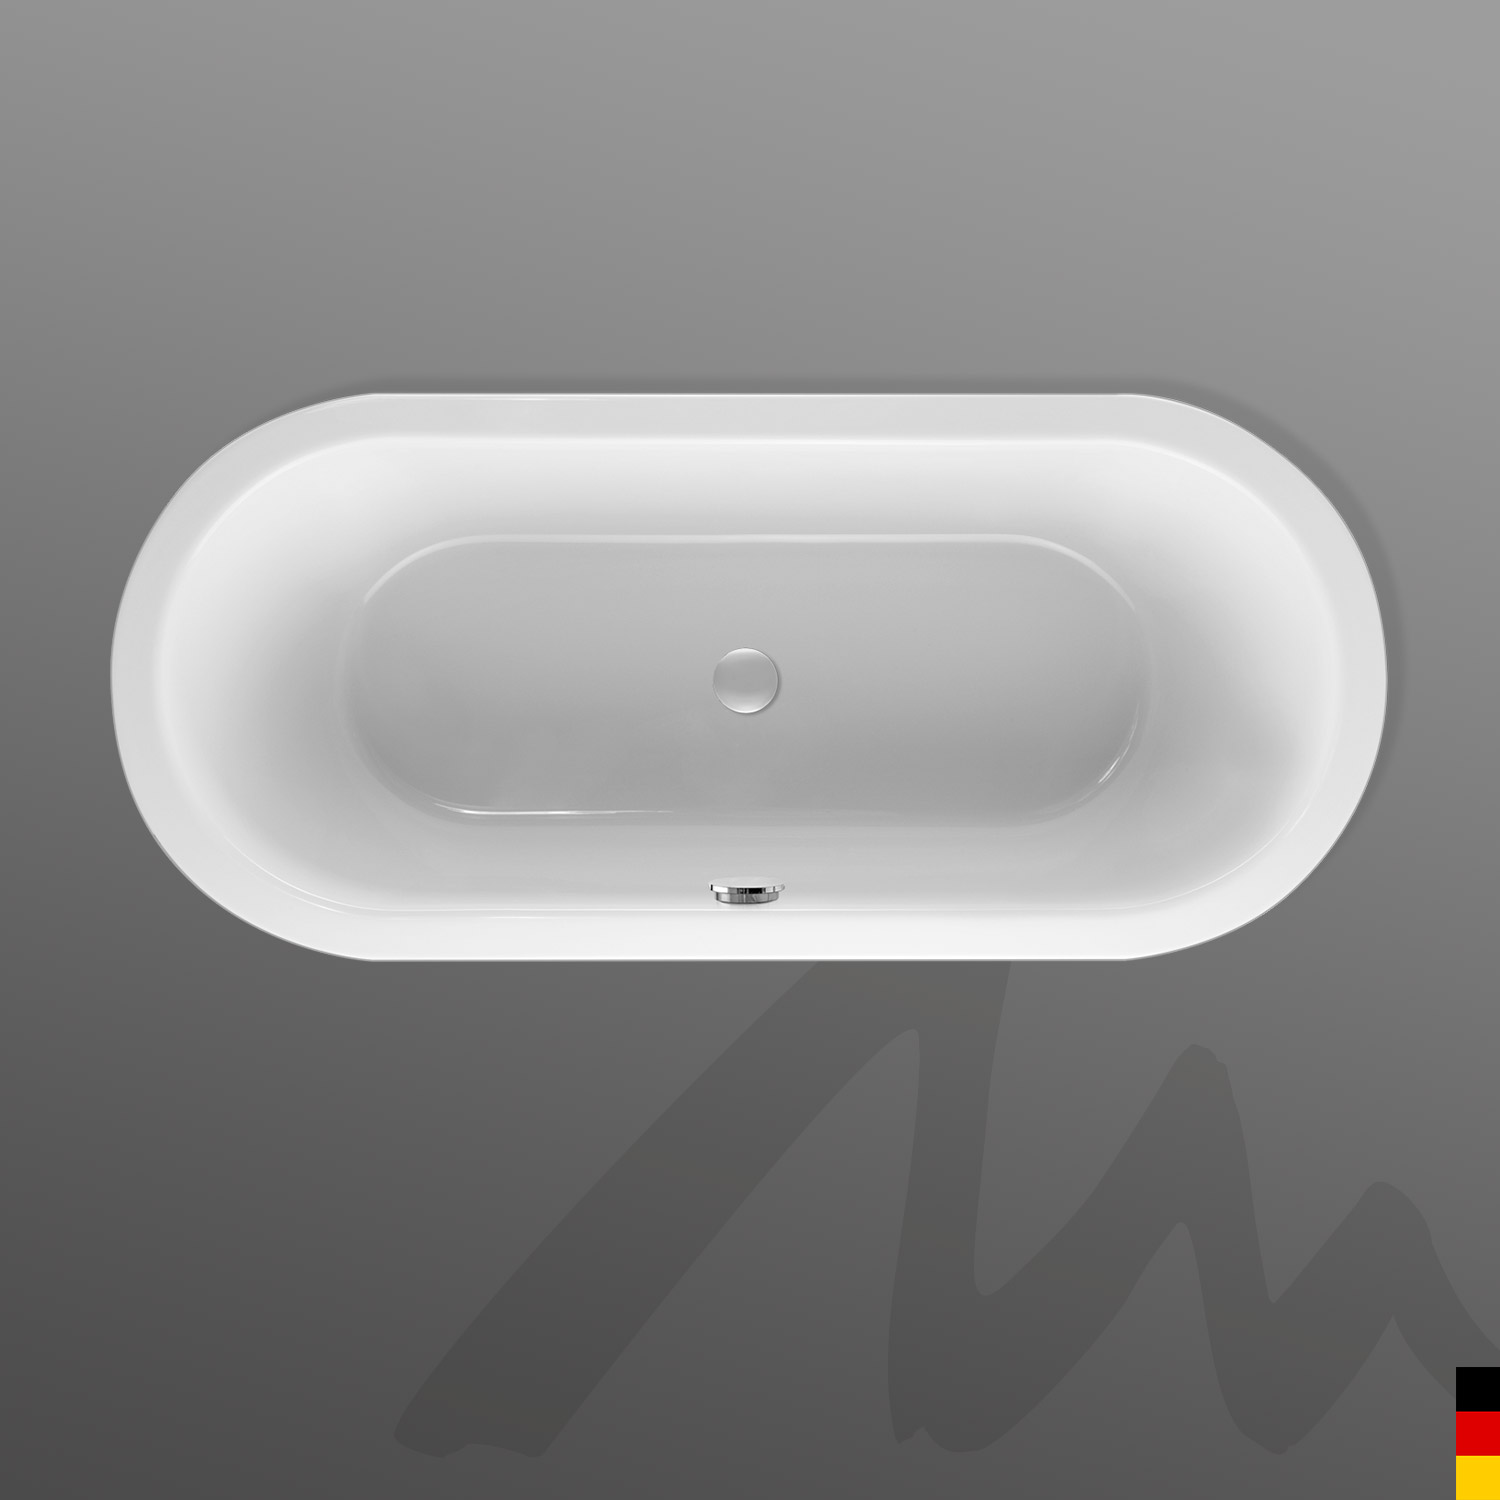 Mauersberger Badewanne Oval Crispa 180/80 duo  180x80x45cm  Farbe:weiß